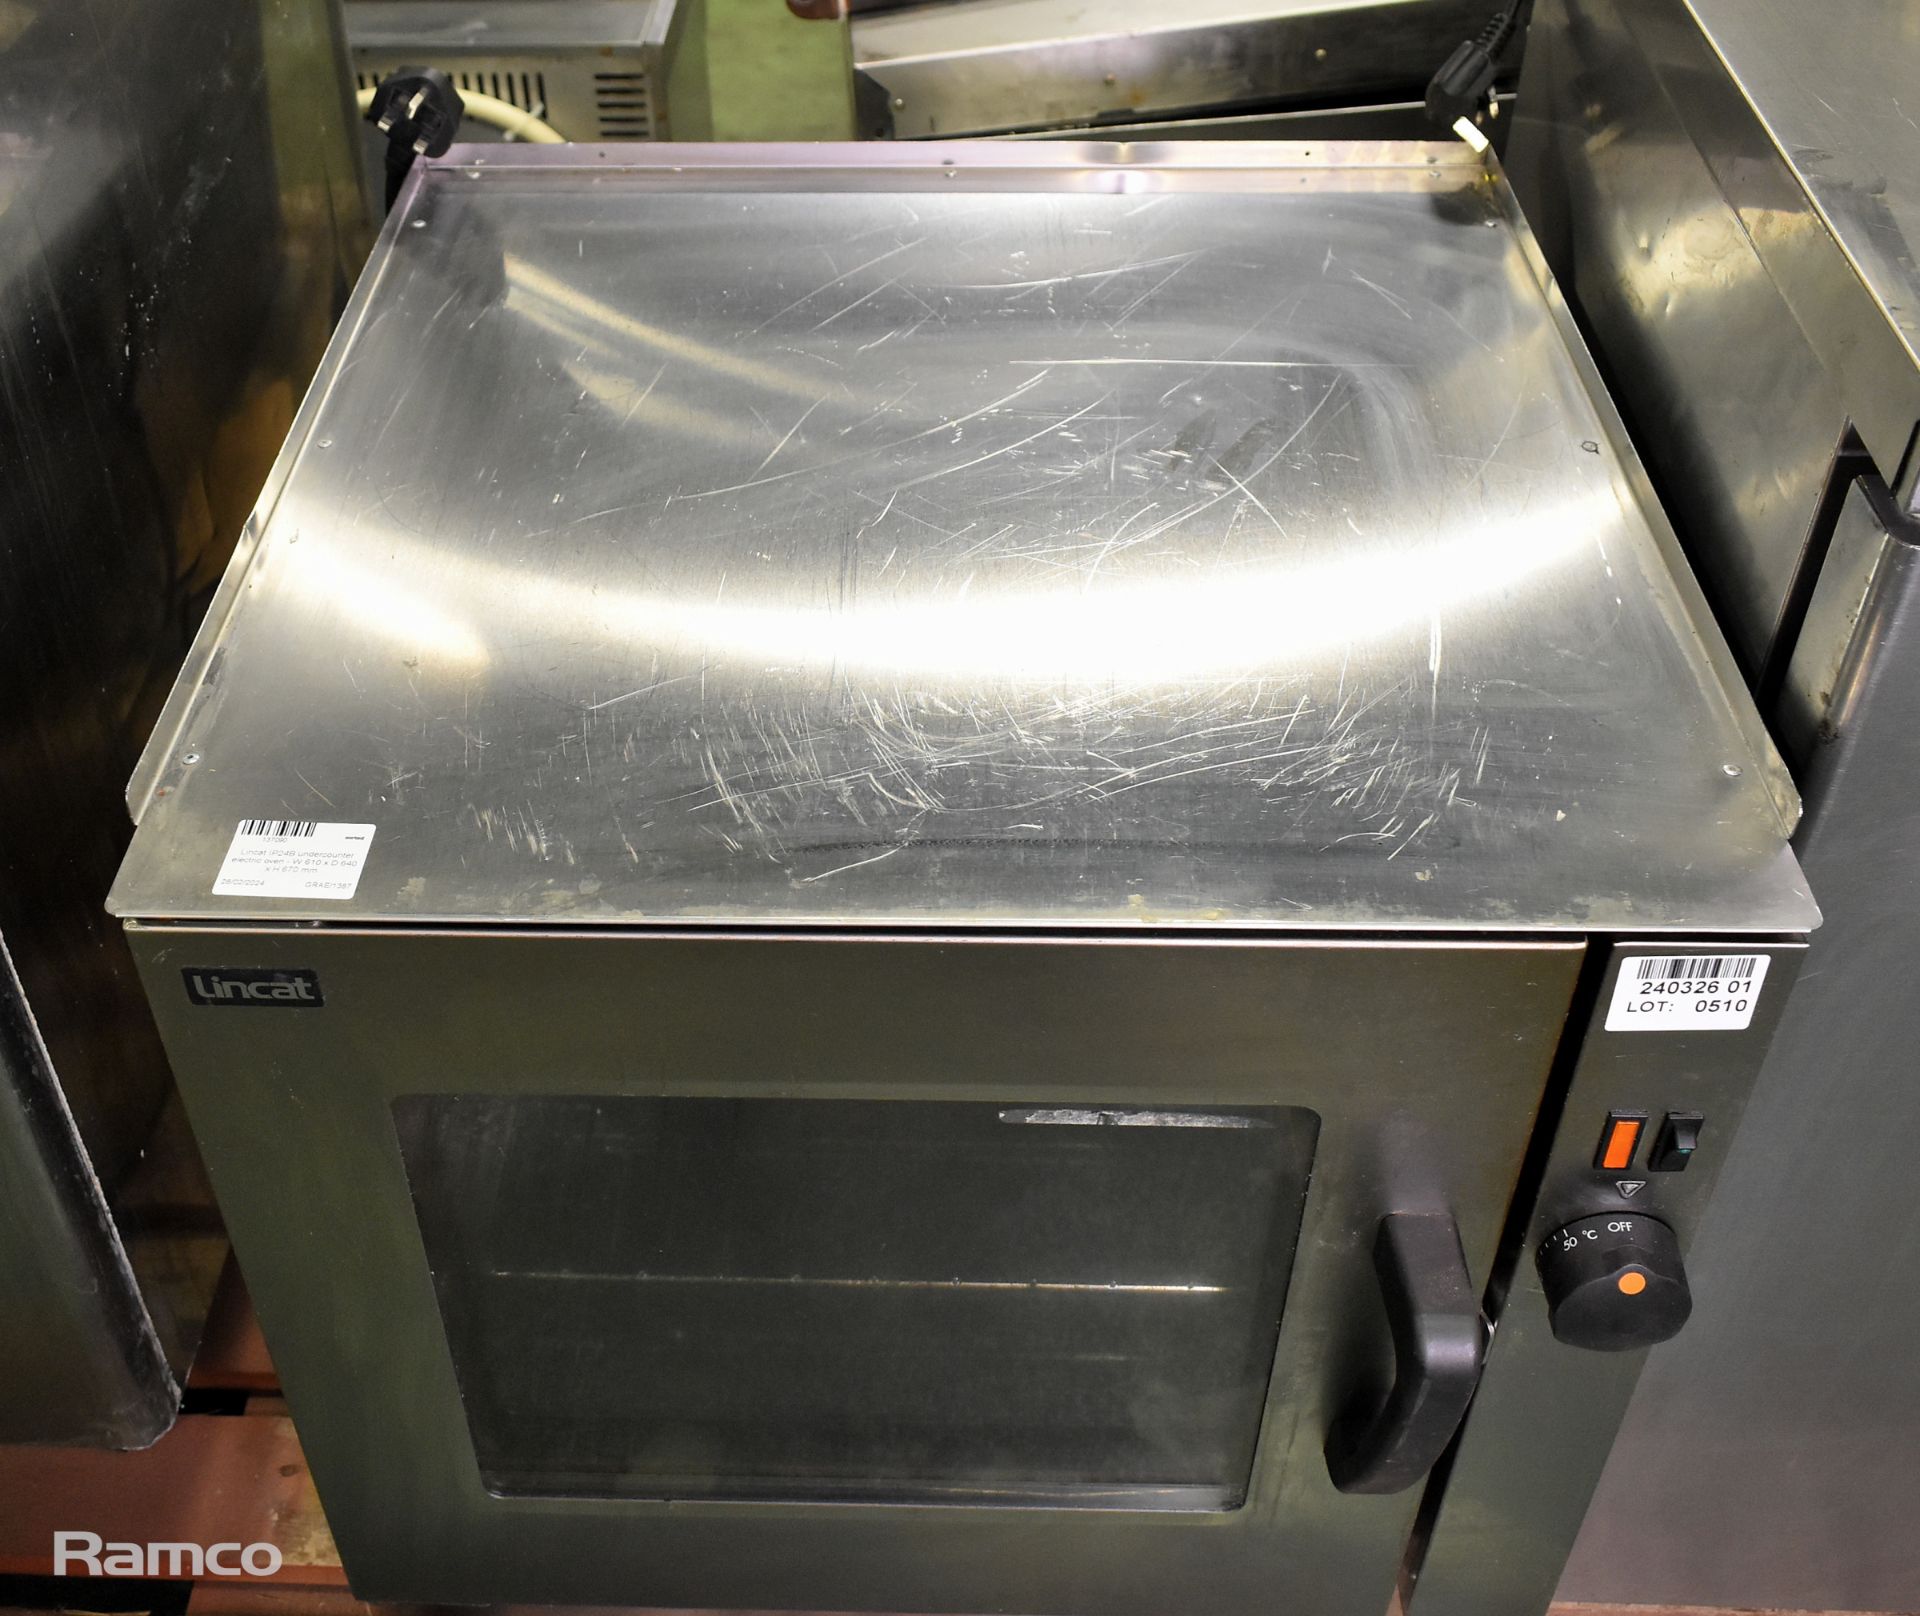 Lincat IP24B undercounter electric oven - W 610 x D 640 x H 670mm - Image 5 of 8